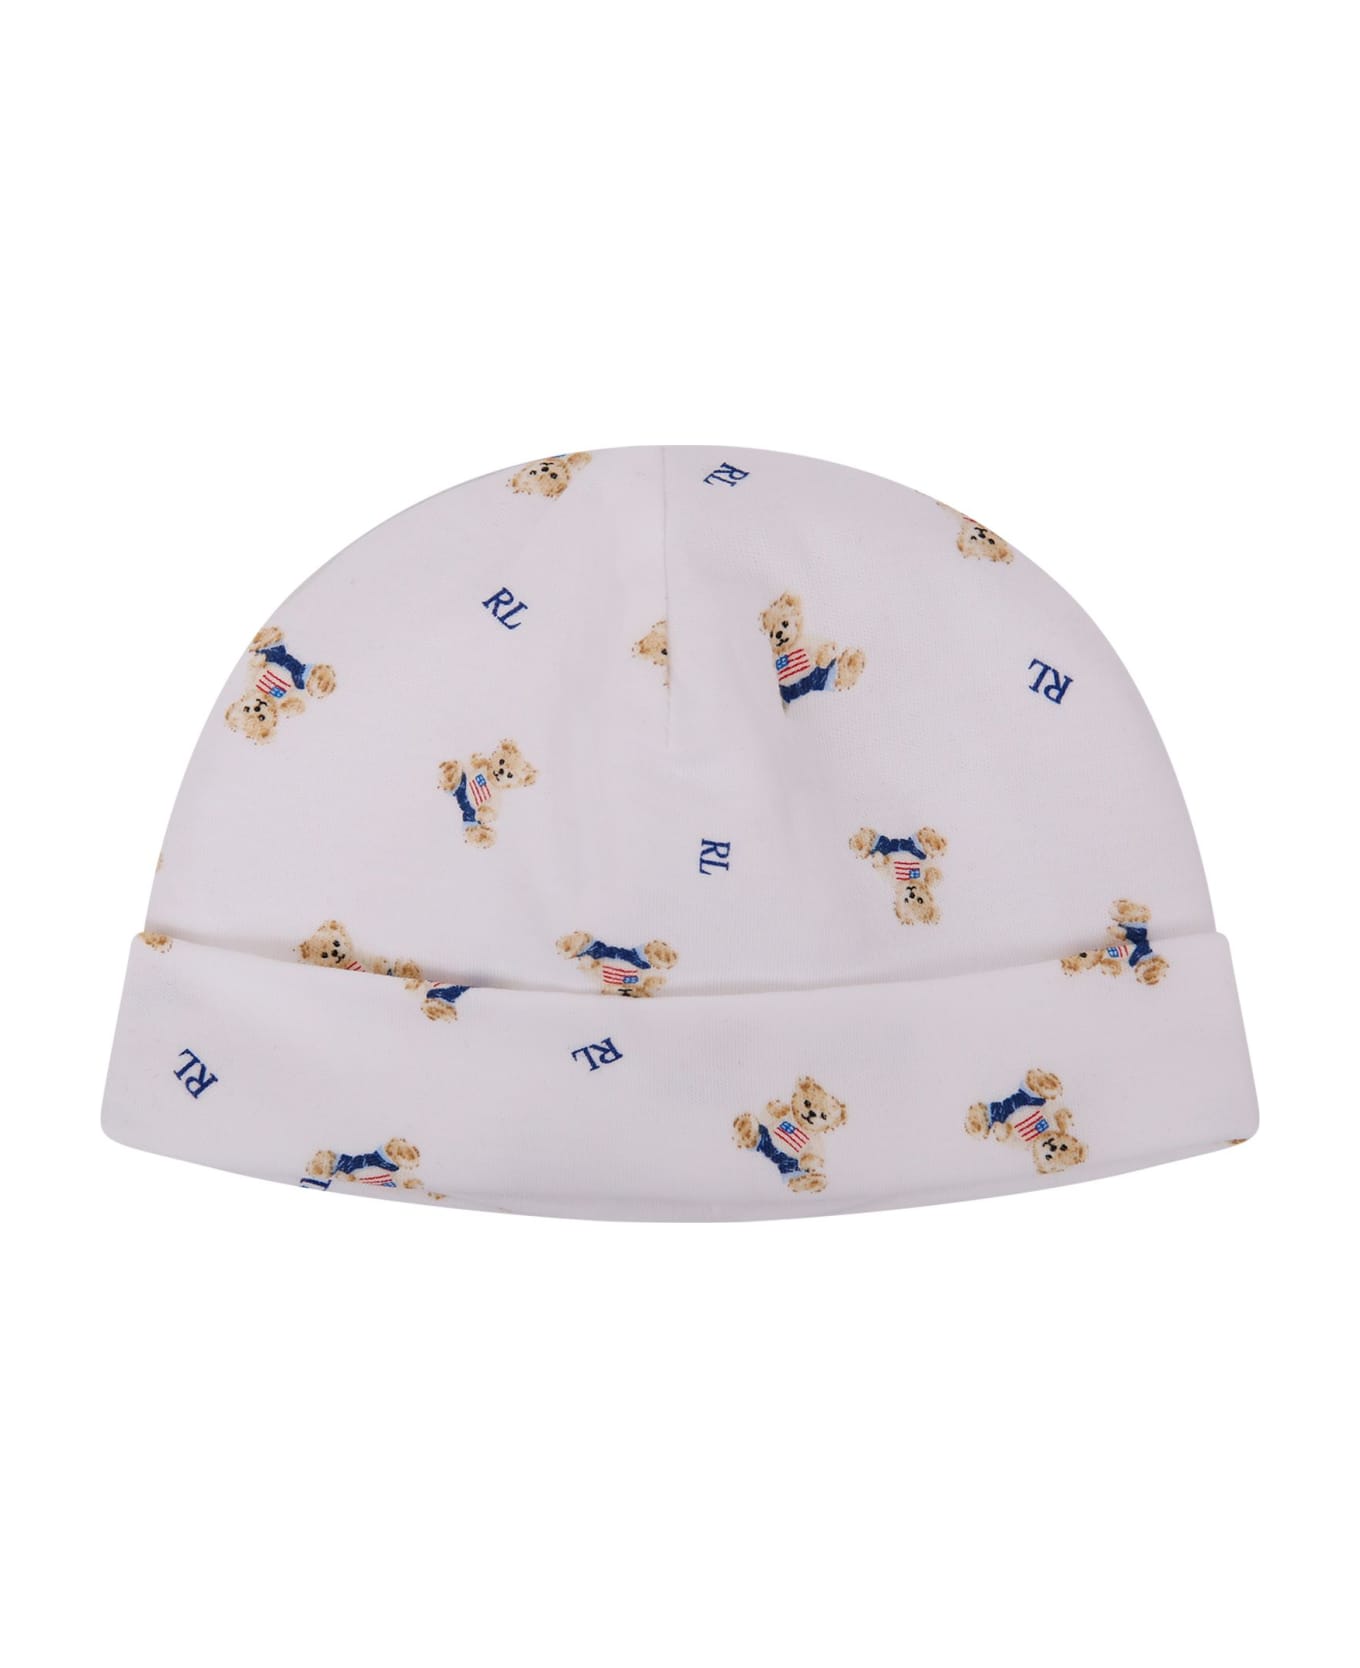 Ralph Lauren White Hat For Babyboy With Bears - White